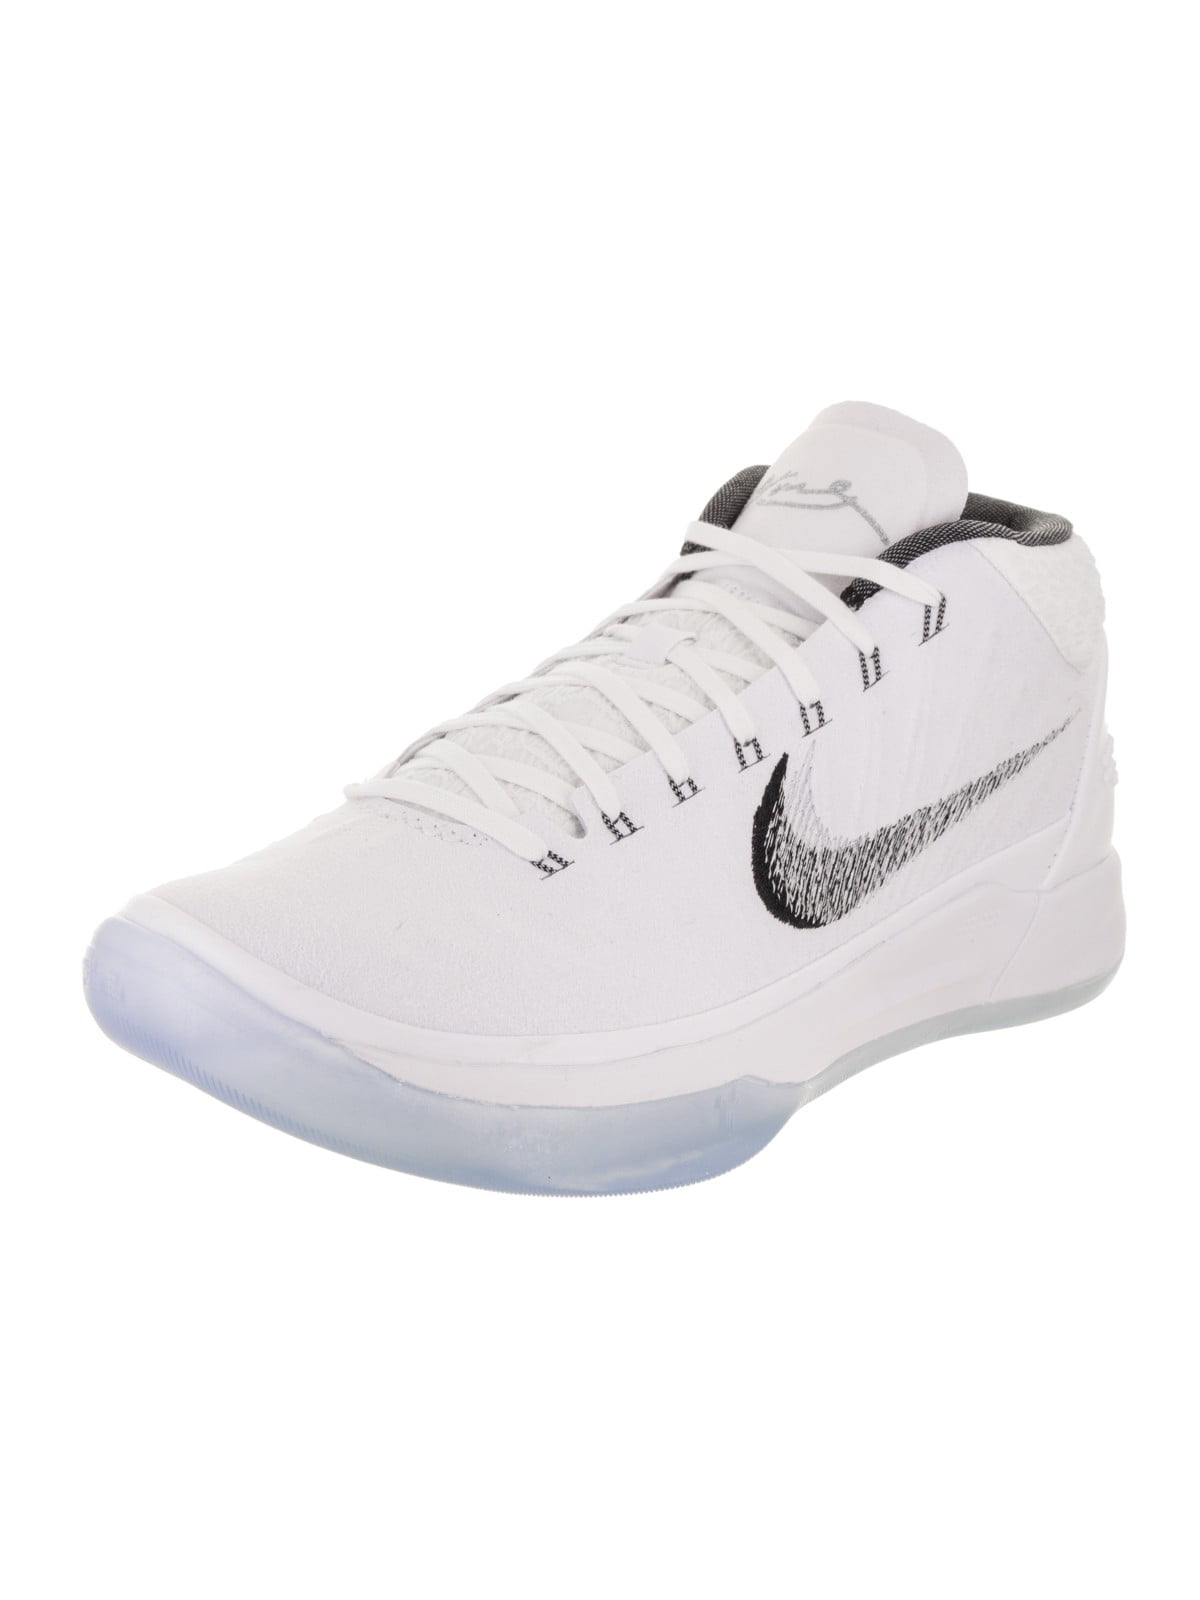 kobes ad | Nike Men's Kobe AD Basketball Shoe